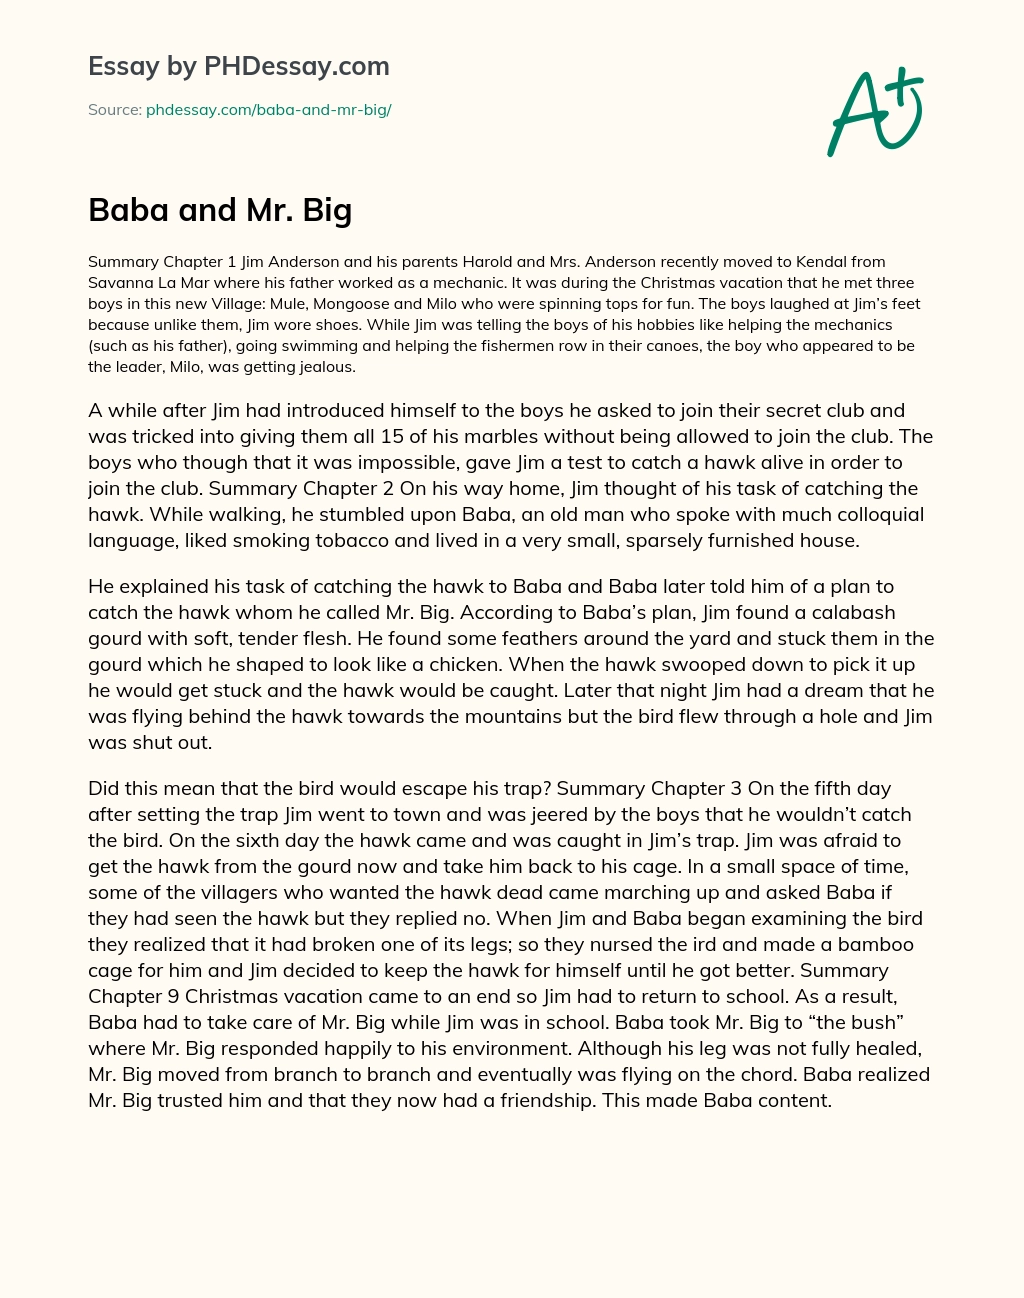 Baba and Mr. Big essay